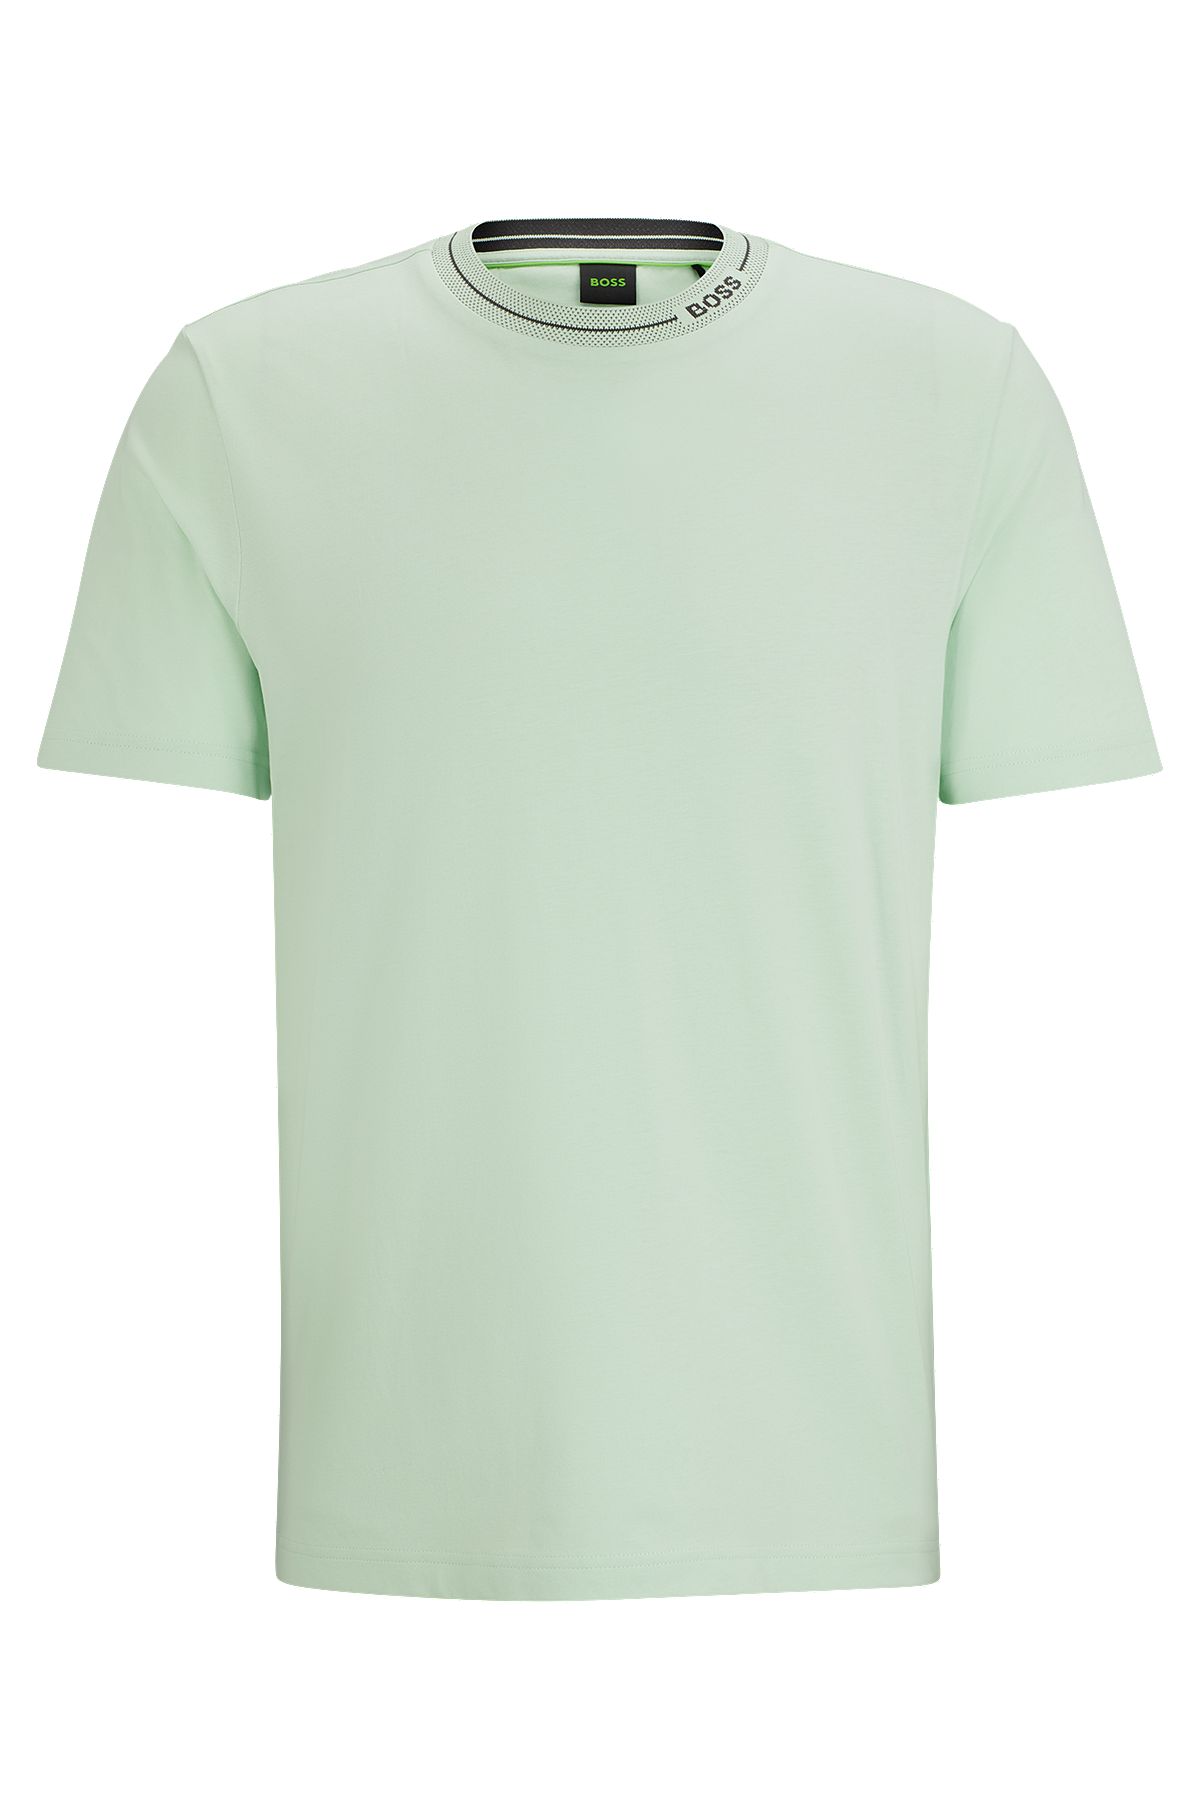 T-Shirts in Green by HUGO | Men BOSS